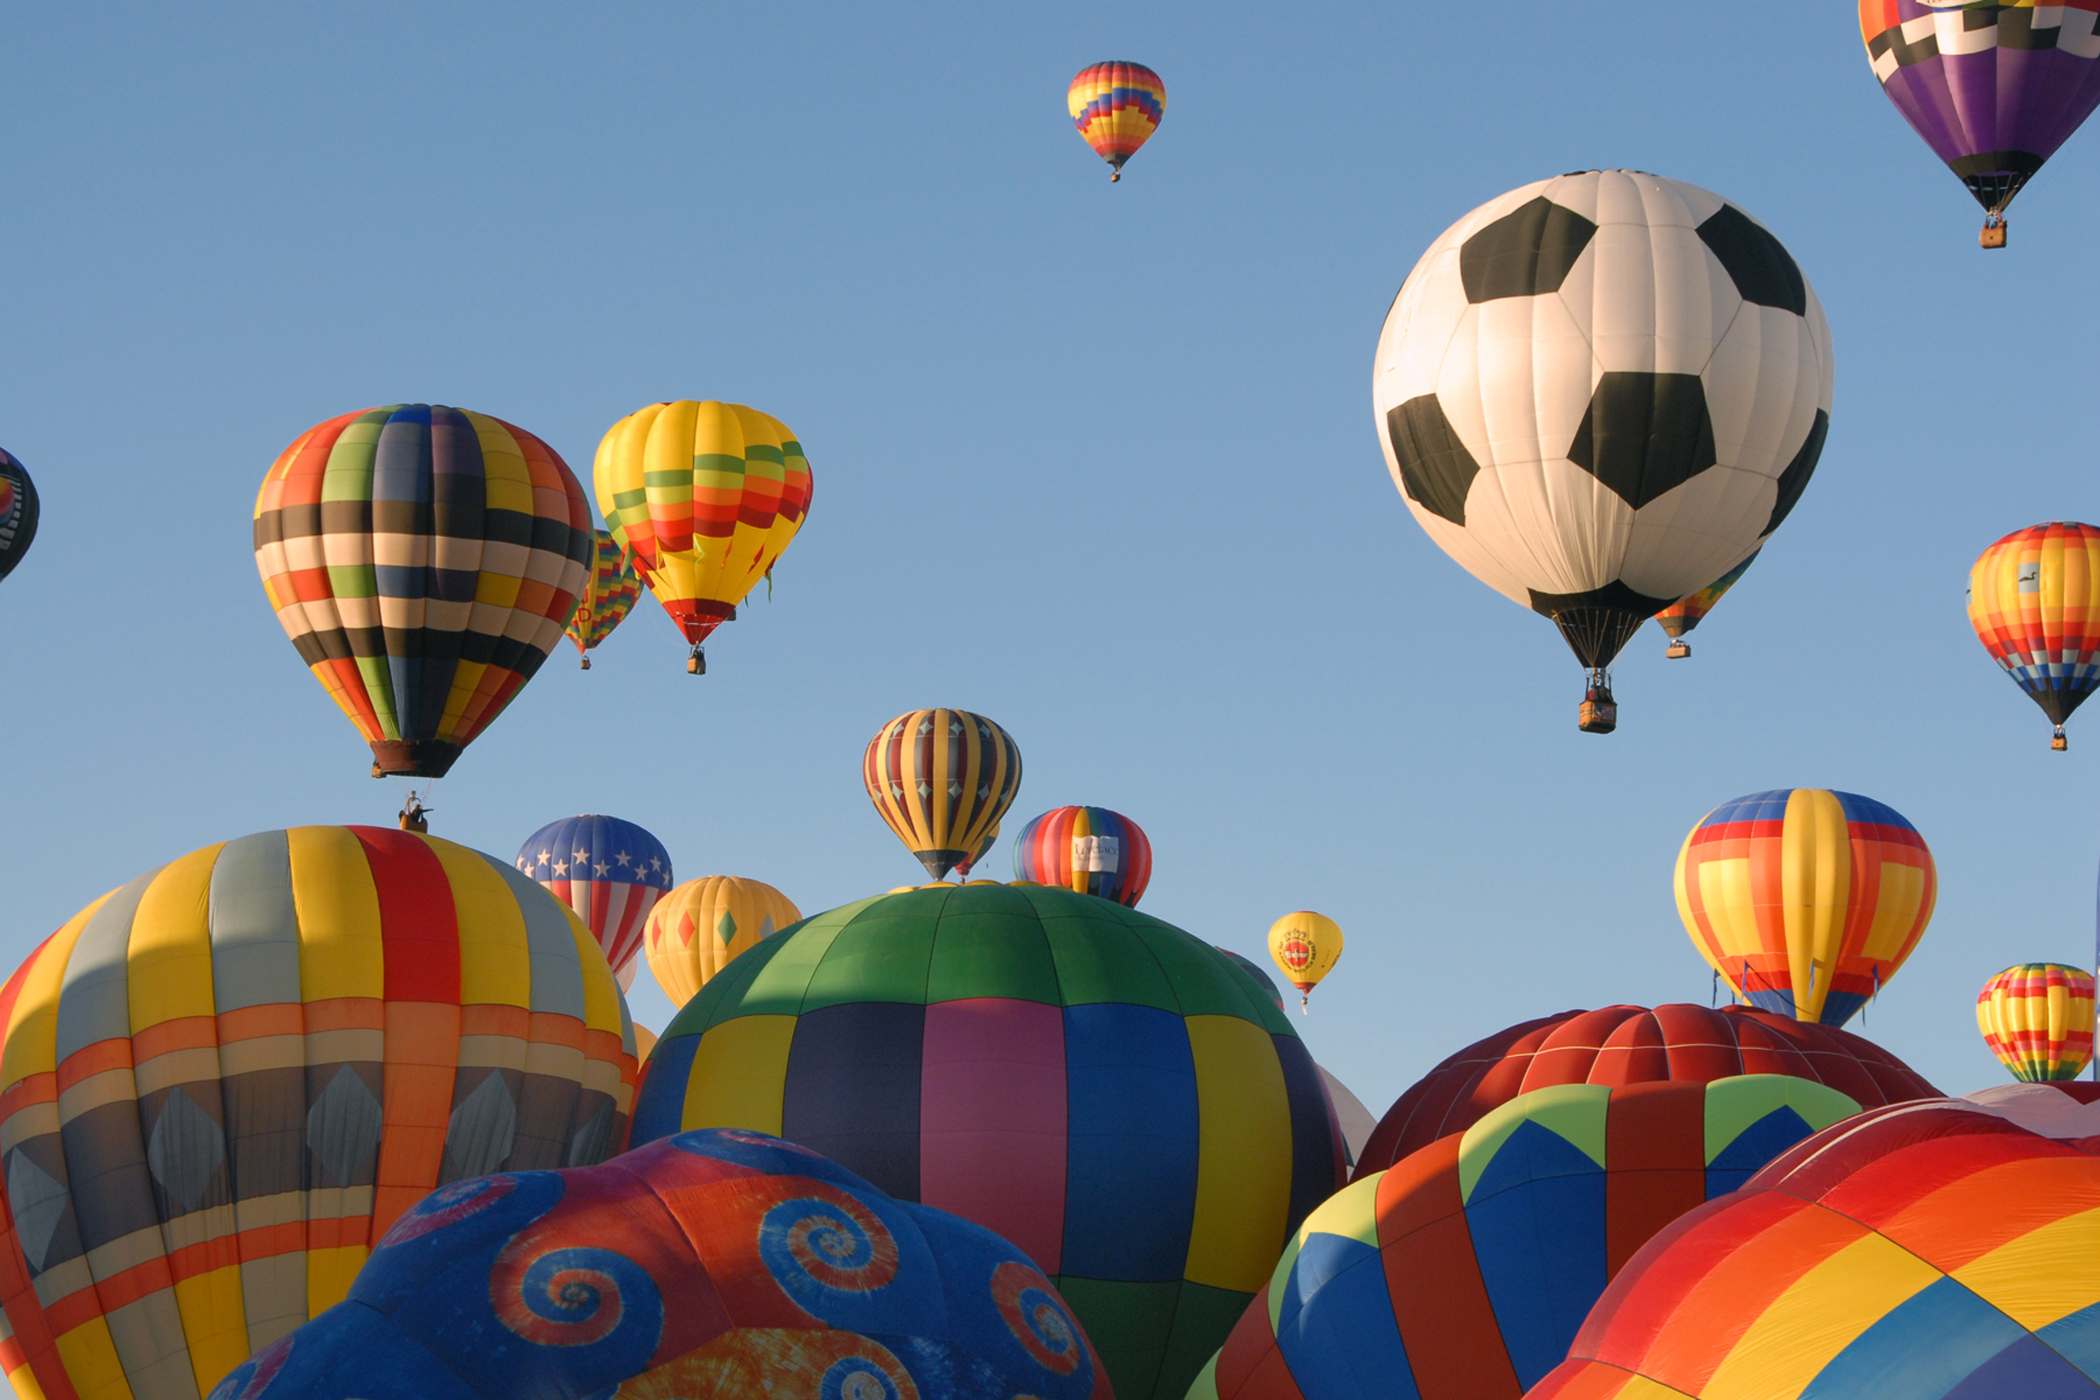 Balloon Fiestas - New Mexico Tourism - Hot Air Balloon Festivals - New  Mexico Tourism - Travel & Vacation Guide